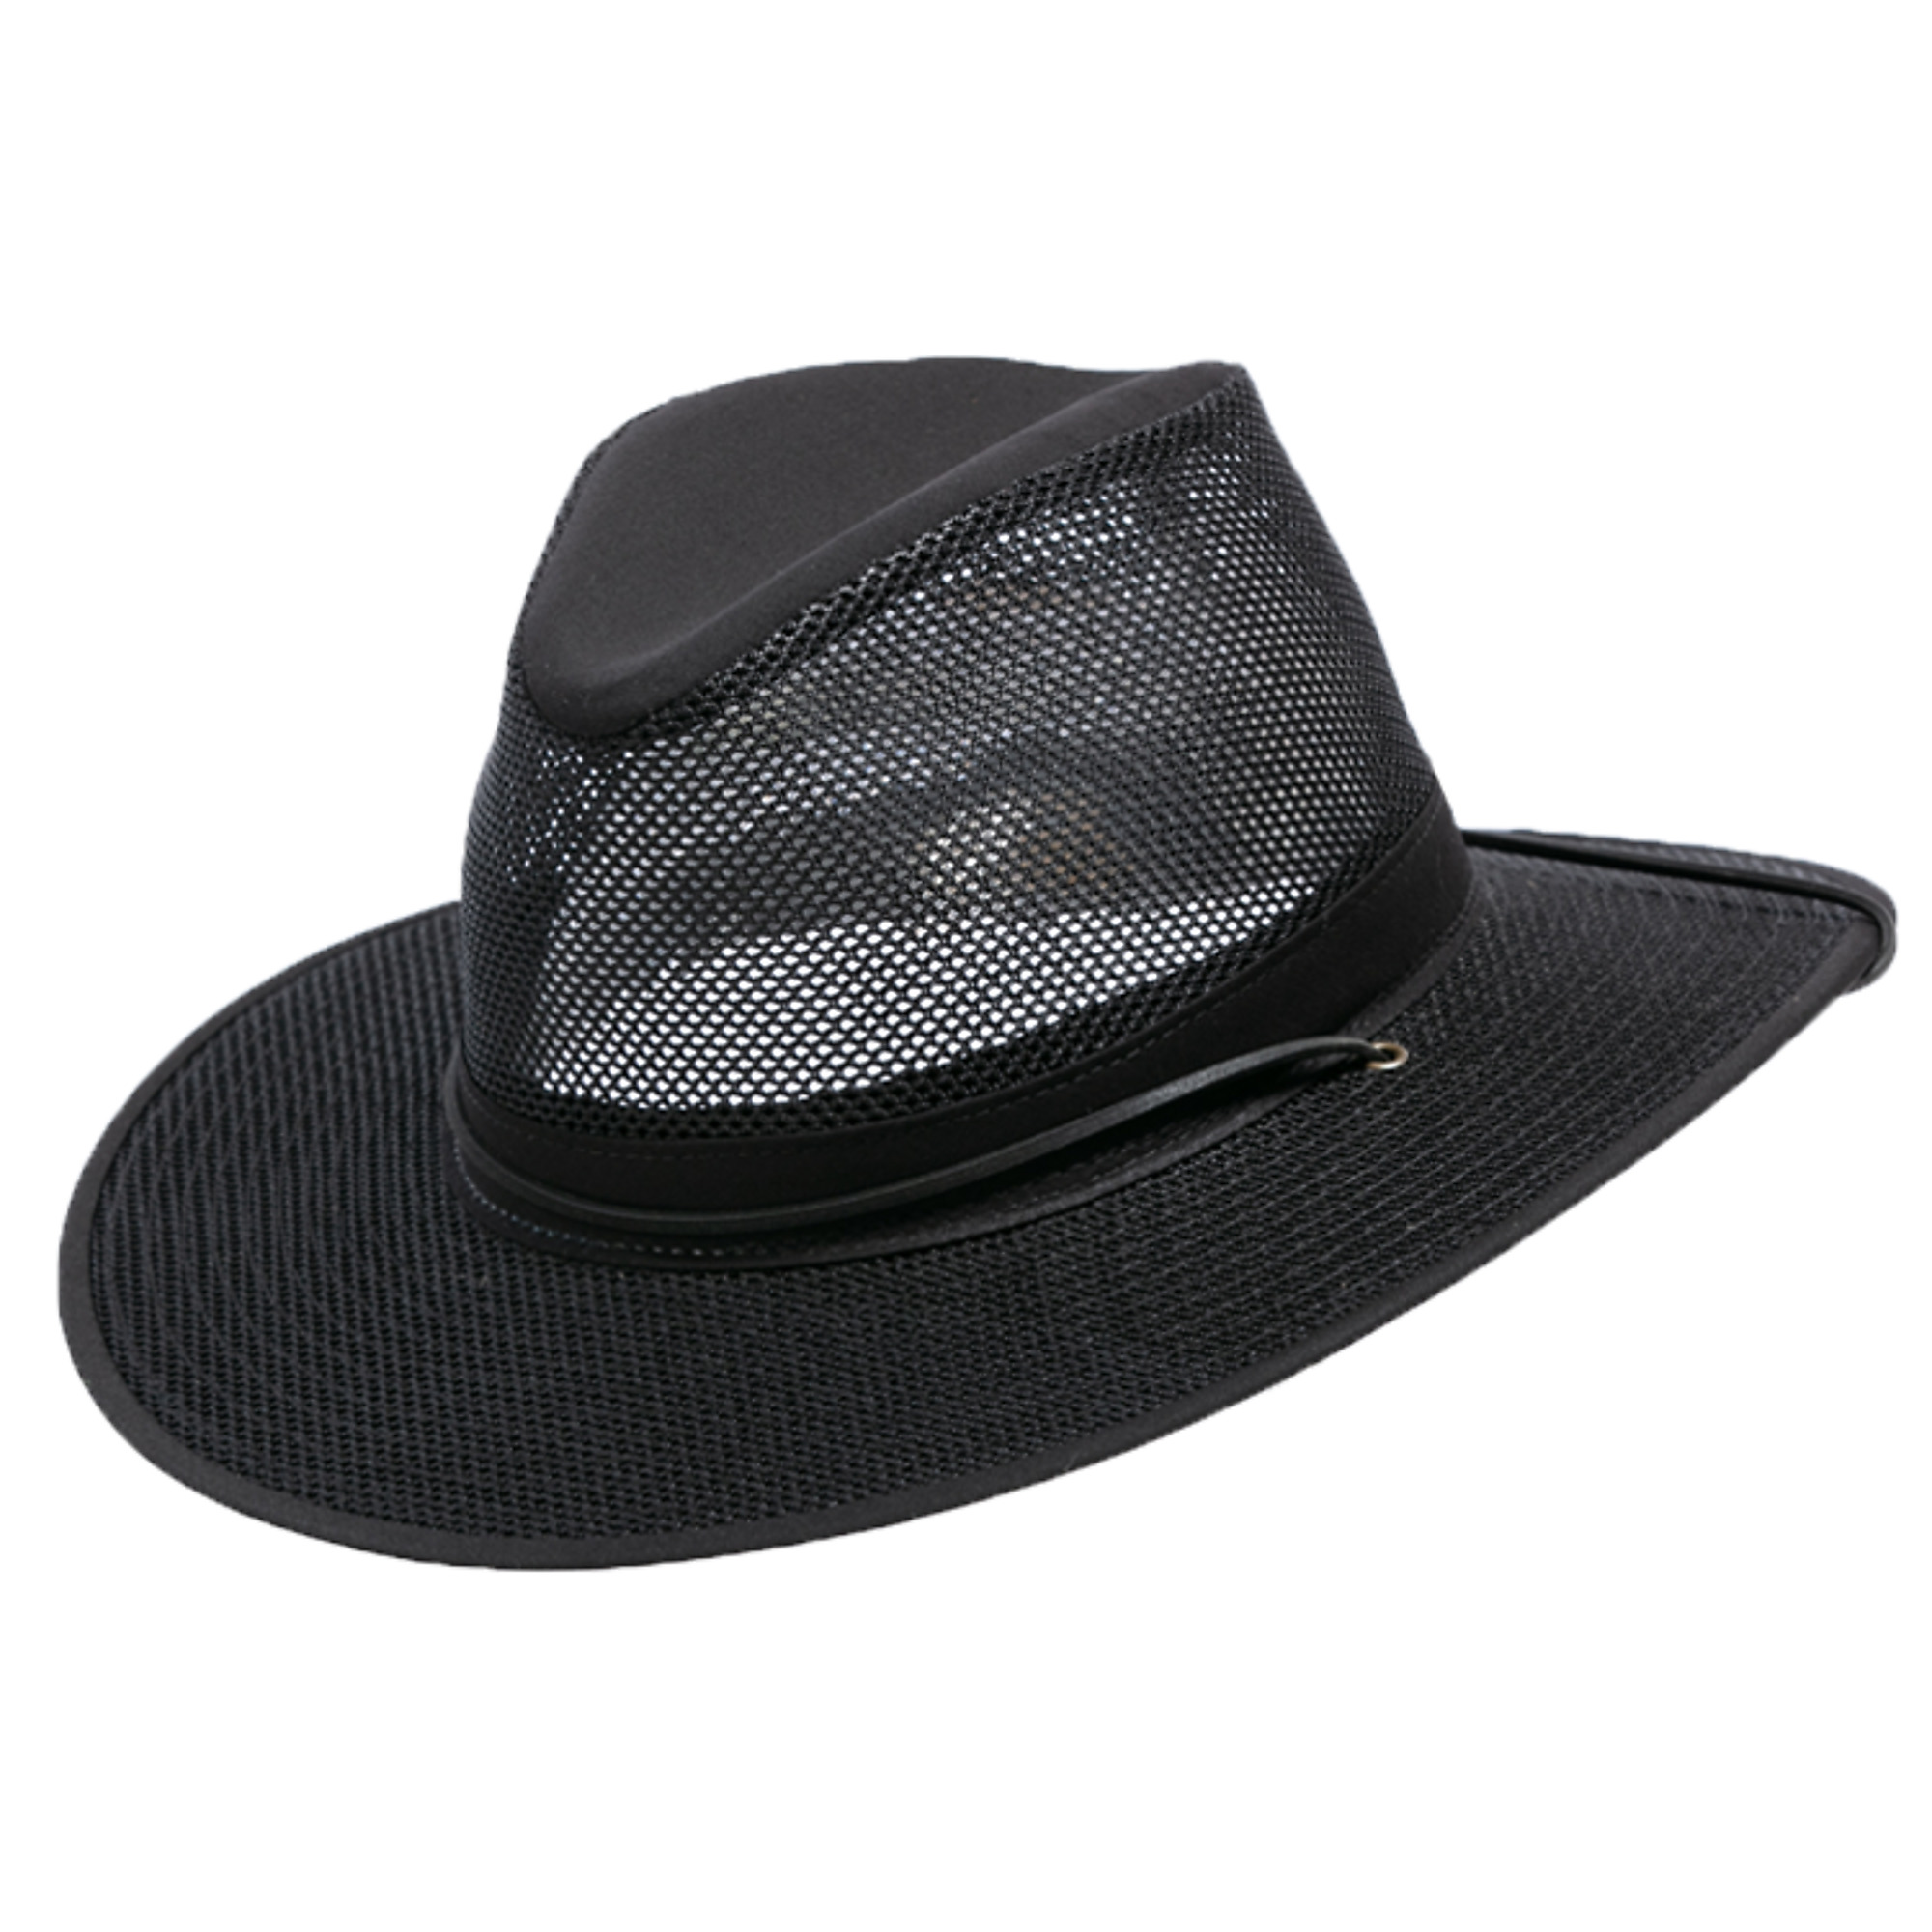 Henschel Hat Company, Orignal Aussie Breezer Hat, UPF 50+, Size 3XL, Color Black, Hat Style Hat, Model 5310-70-XXXL